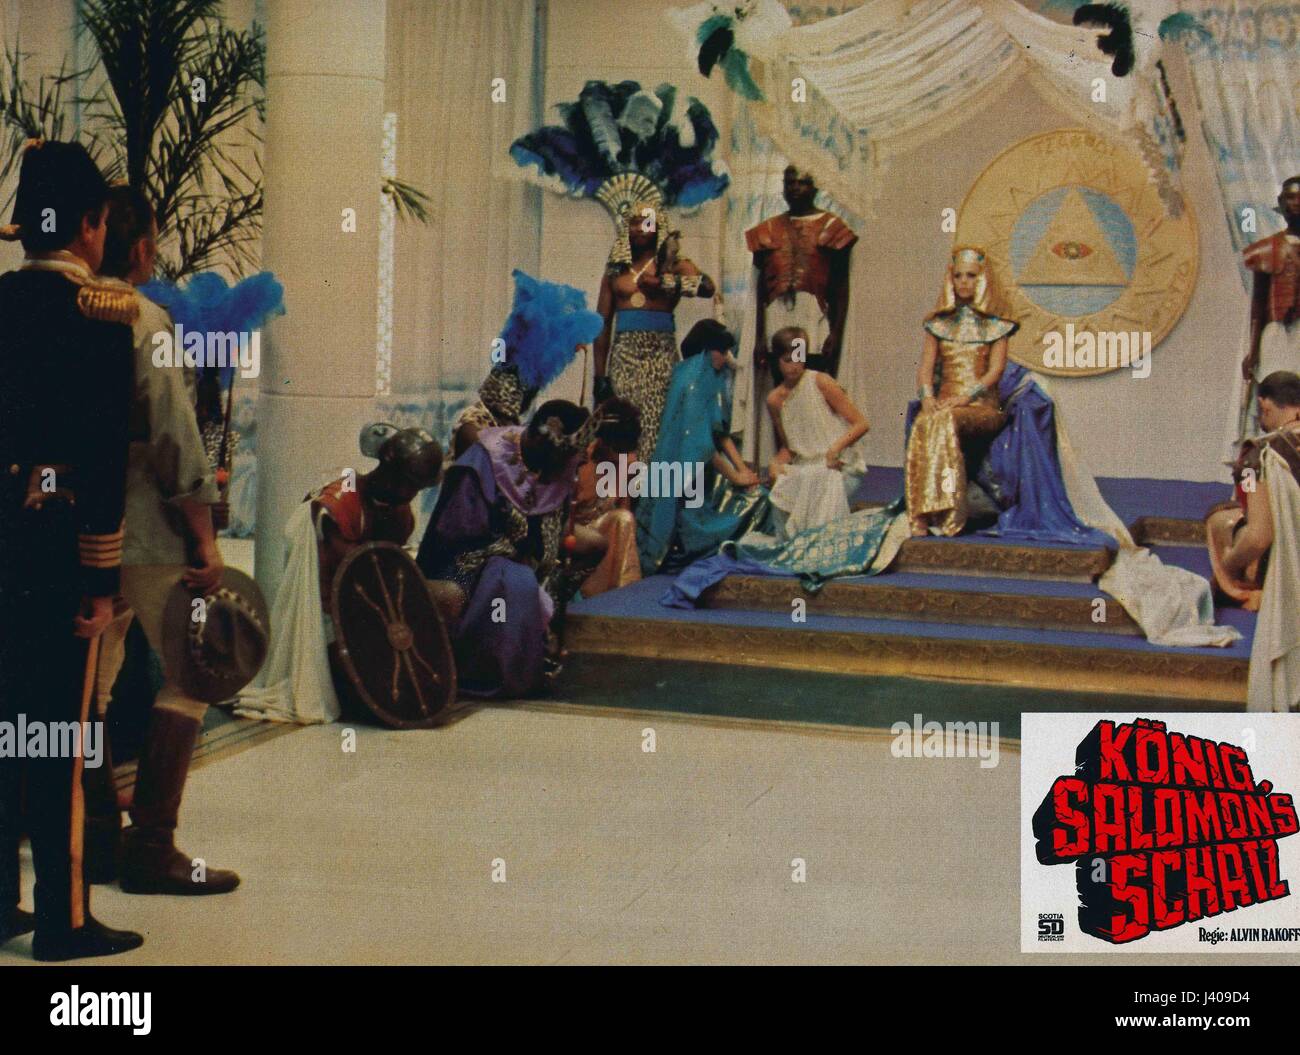 King Solomon's Treasure, aka: König Salomons Schatz, Großbritannien/Kanada  1977, Regie: Alvin Rakoff, Szenenfoto Stock Photo - Alamy